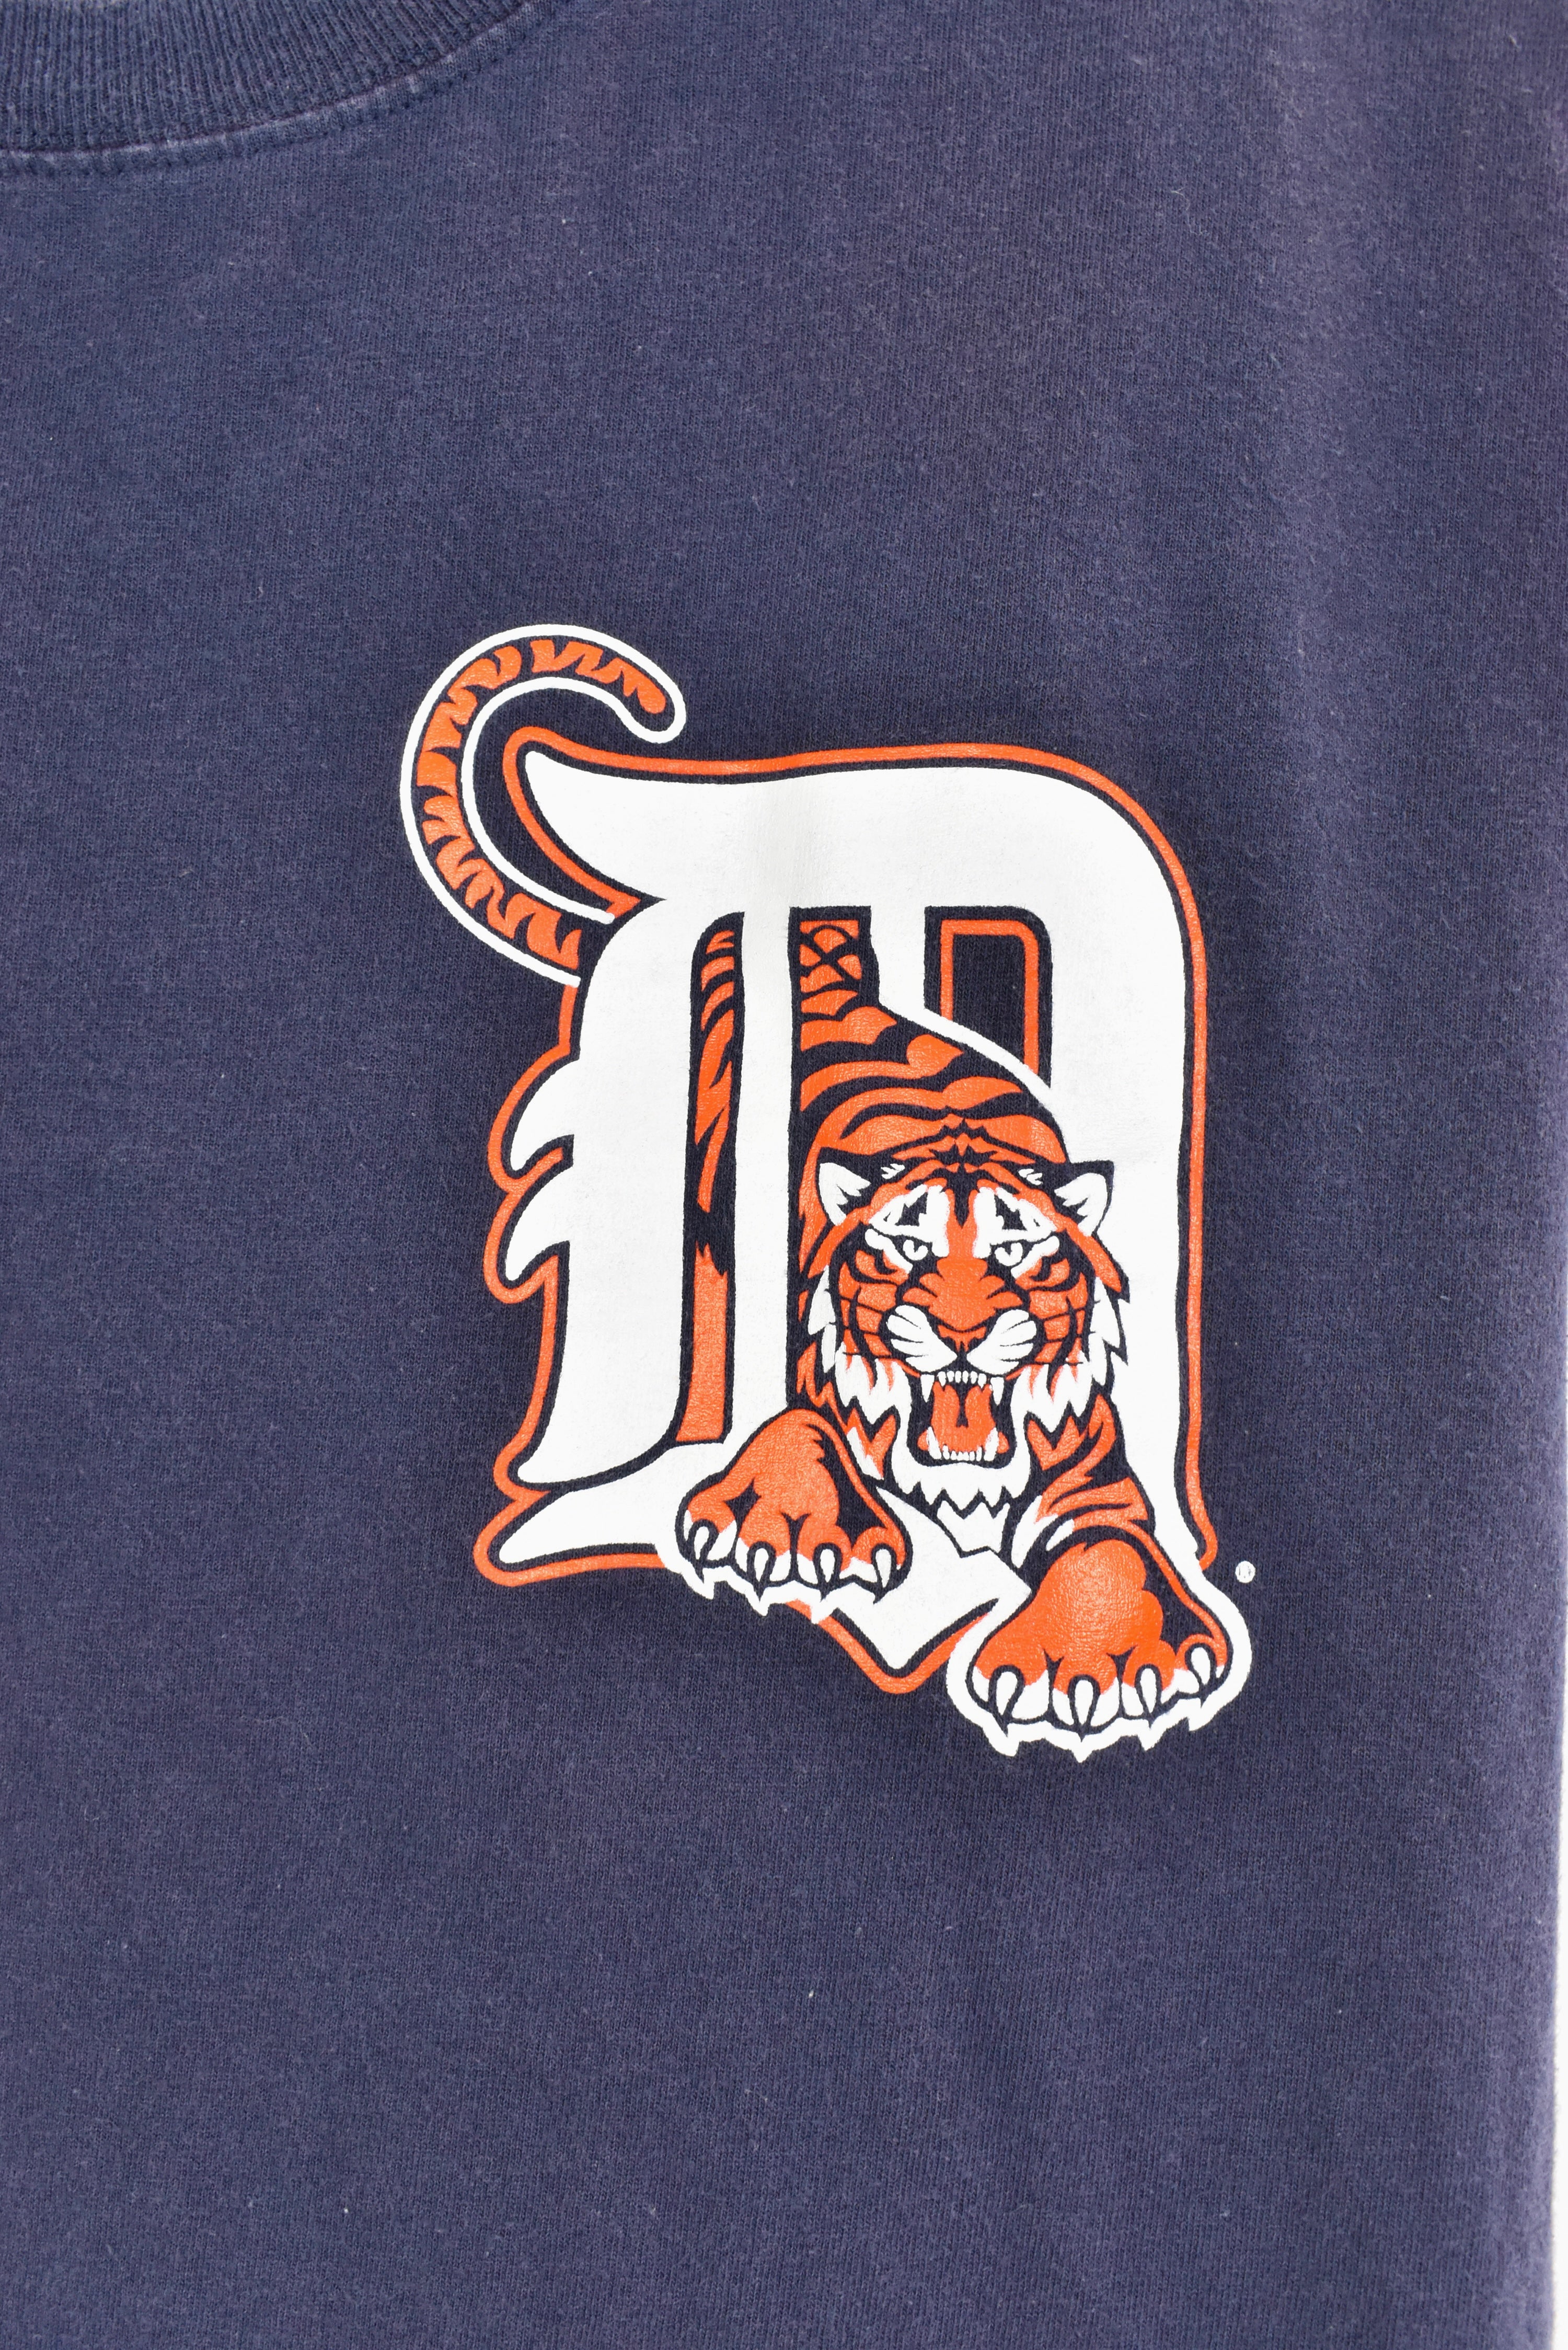 Vintage Detroit Tigers shirt, MLB short sleeve graphic tee - medium, navy blue PRO SPORT